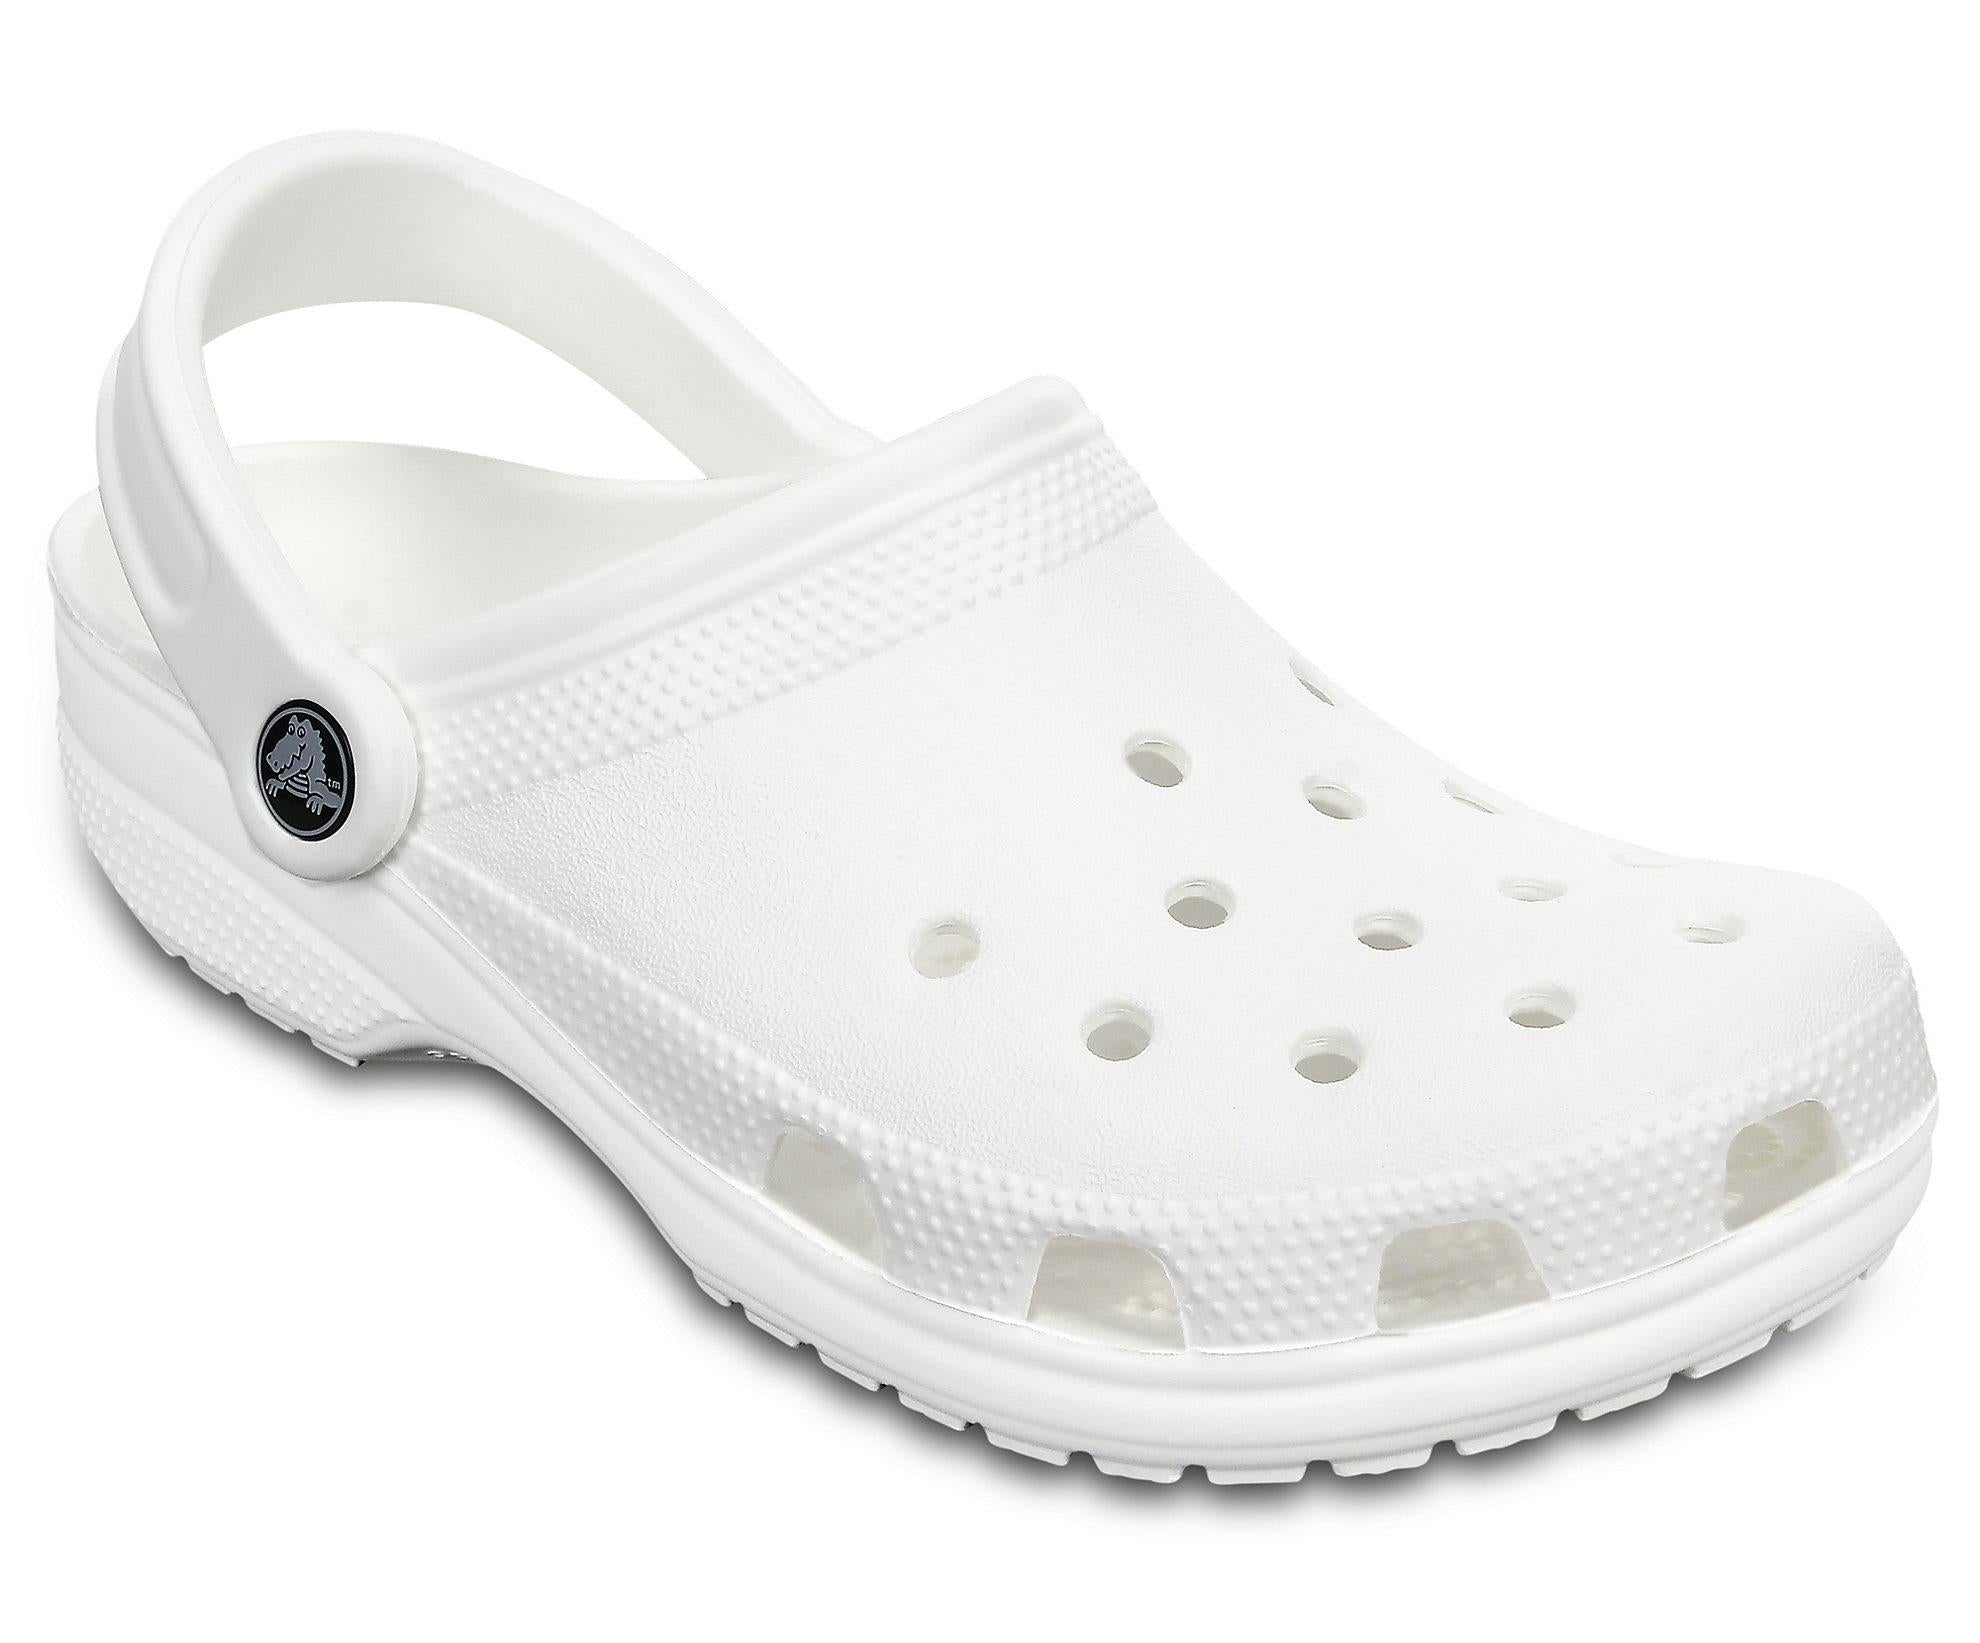 Crocs Classic white ventilated Croslite mule unisex sandal clog #10001